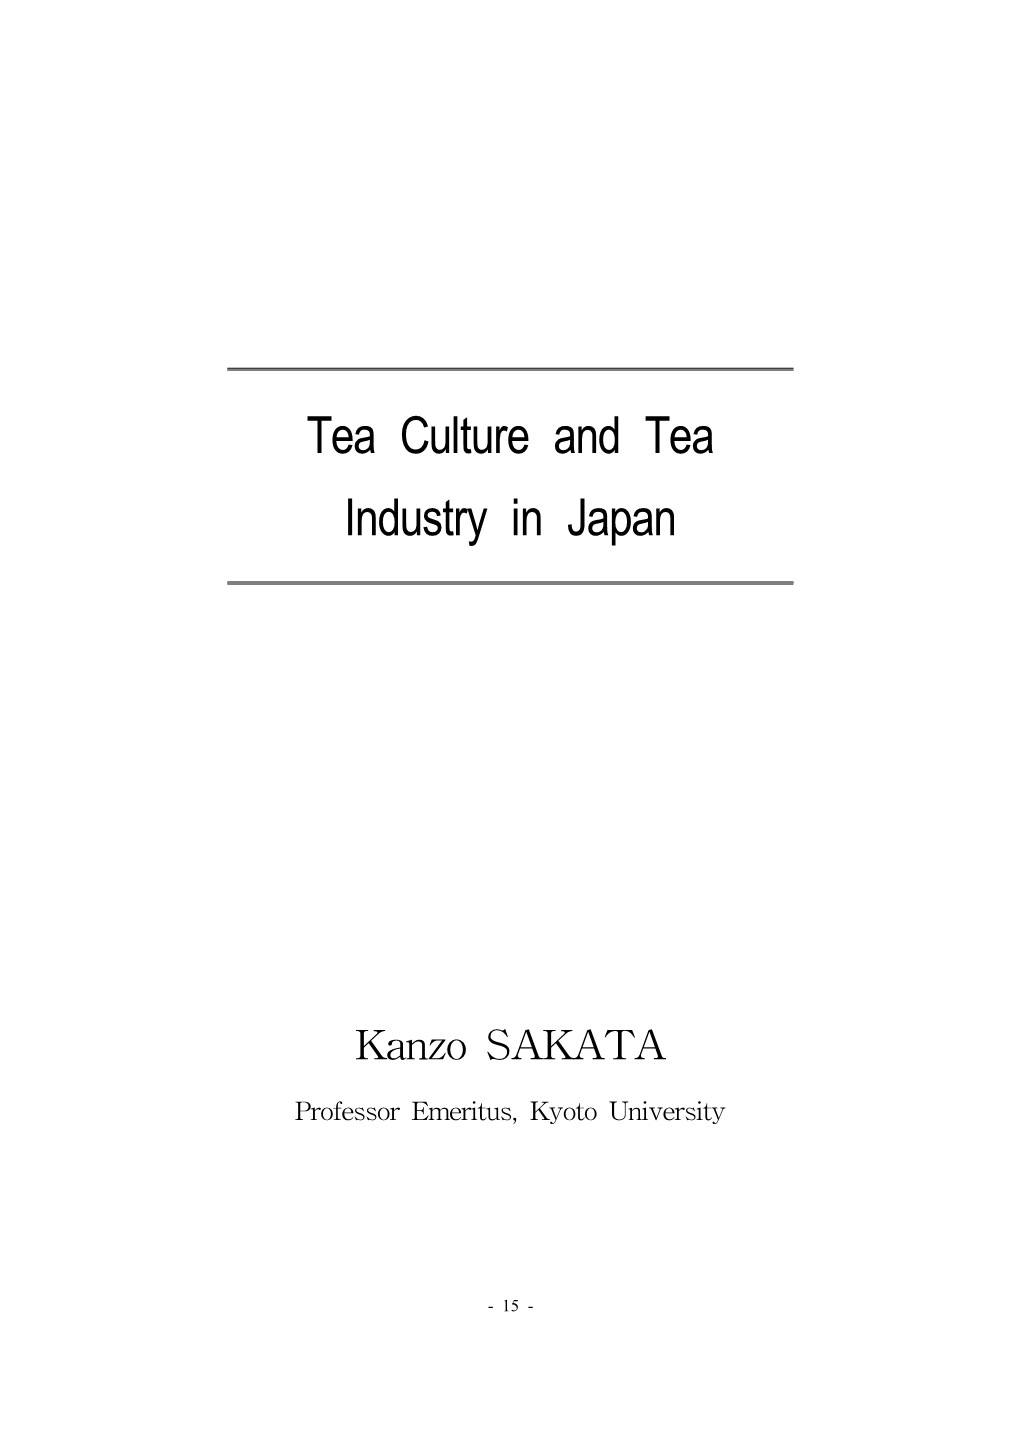 Tea Culture and Tea Industry in Japan